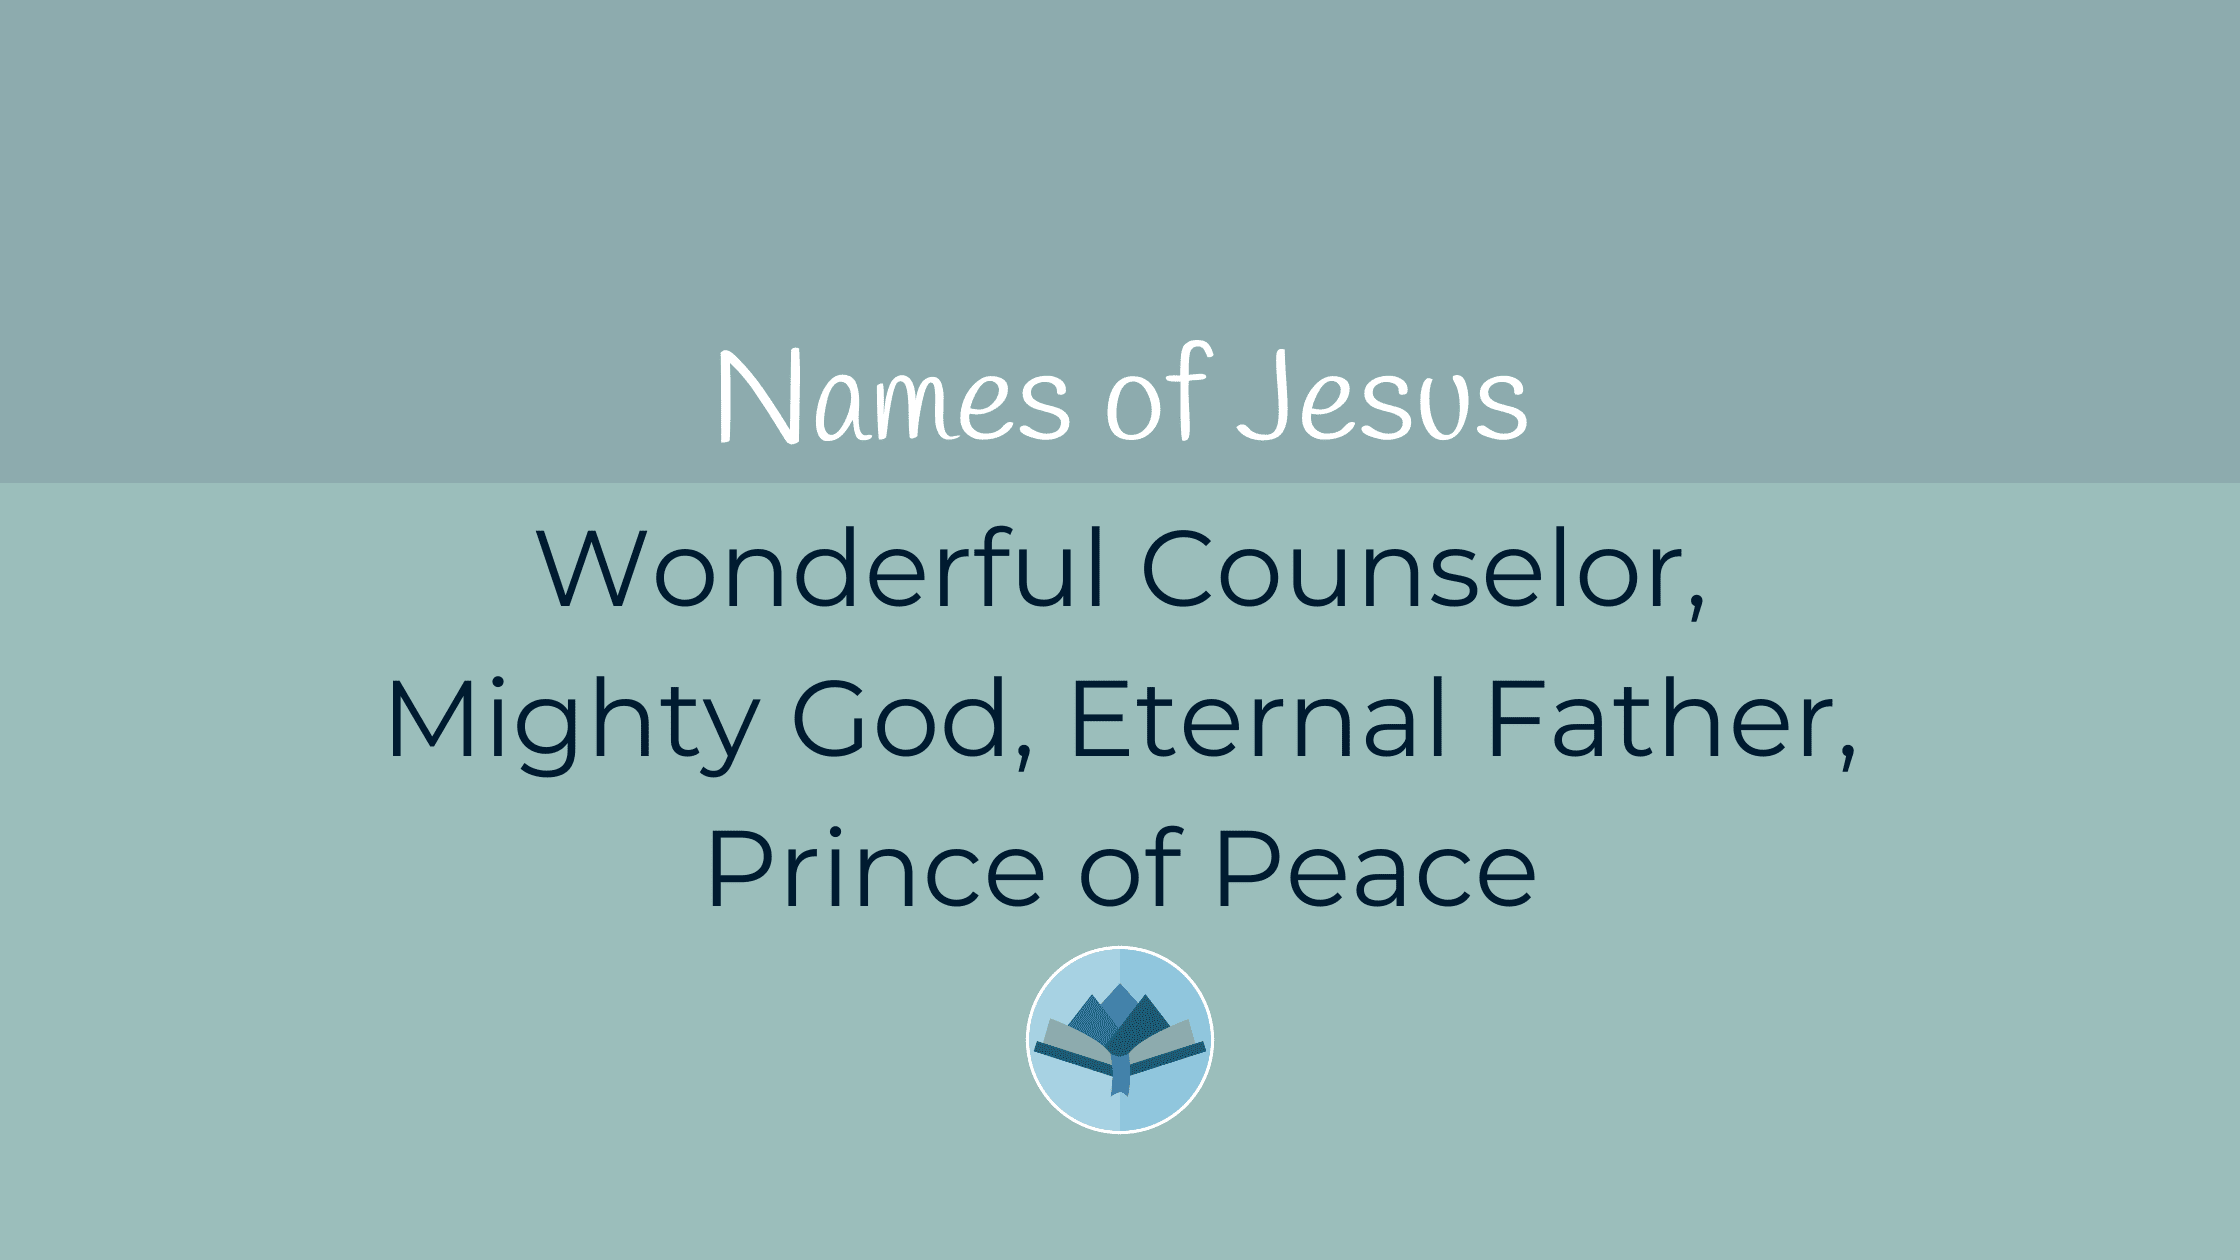 Names of Jesus Wonderful Counselor